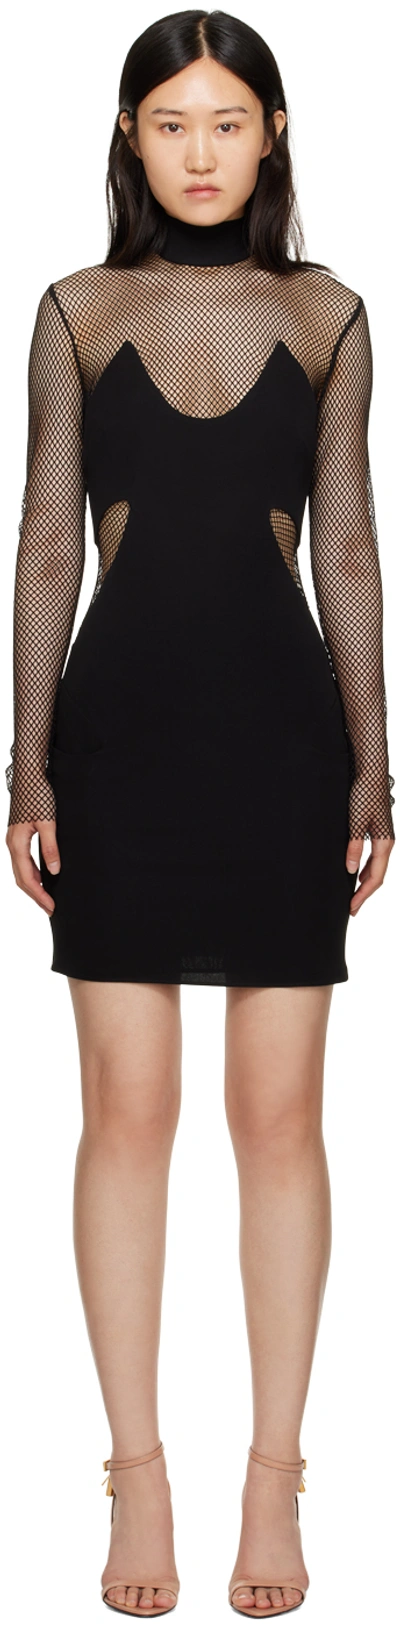 Tom Ford Black Crepe Mini Dress With Mesh Inset Details